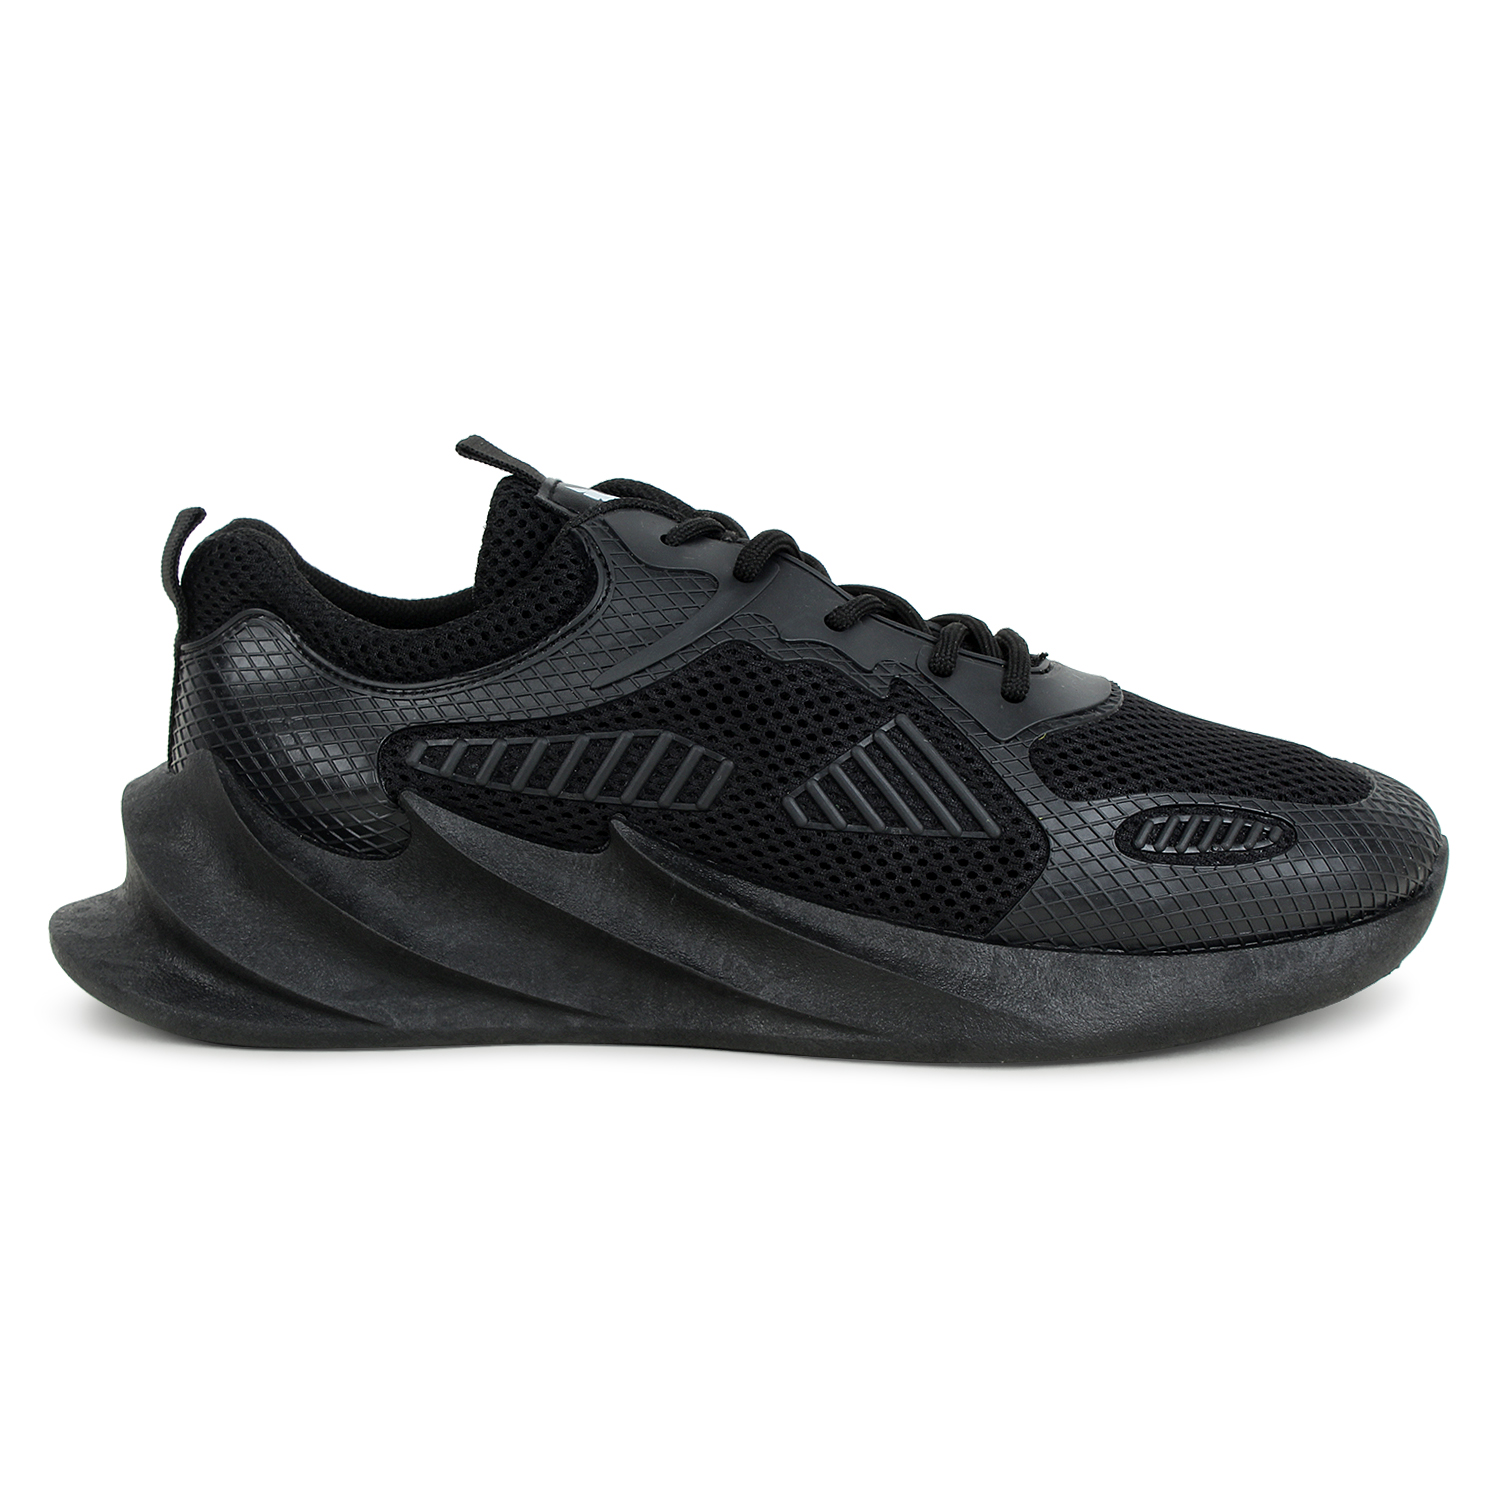 cefiro shoes black